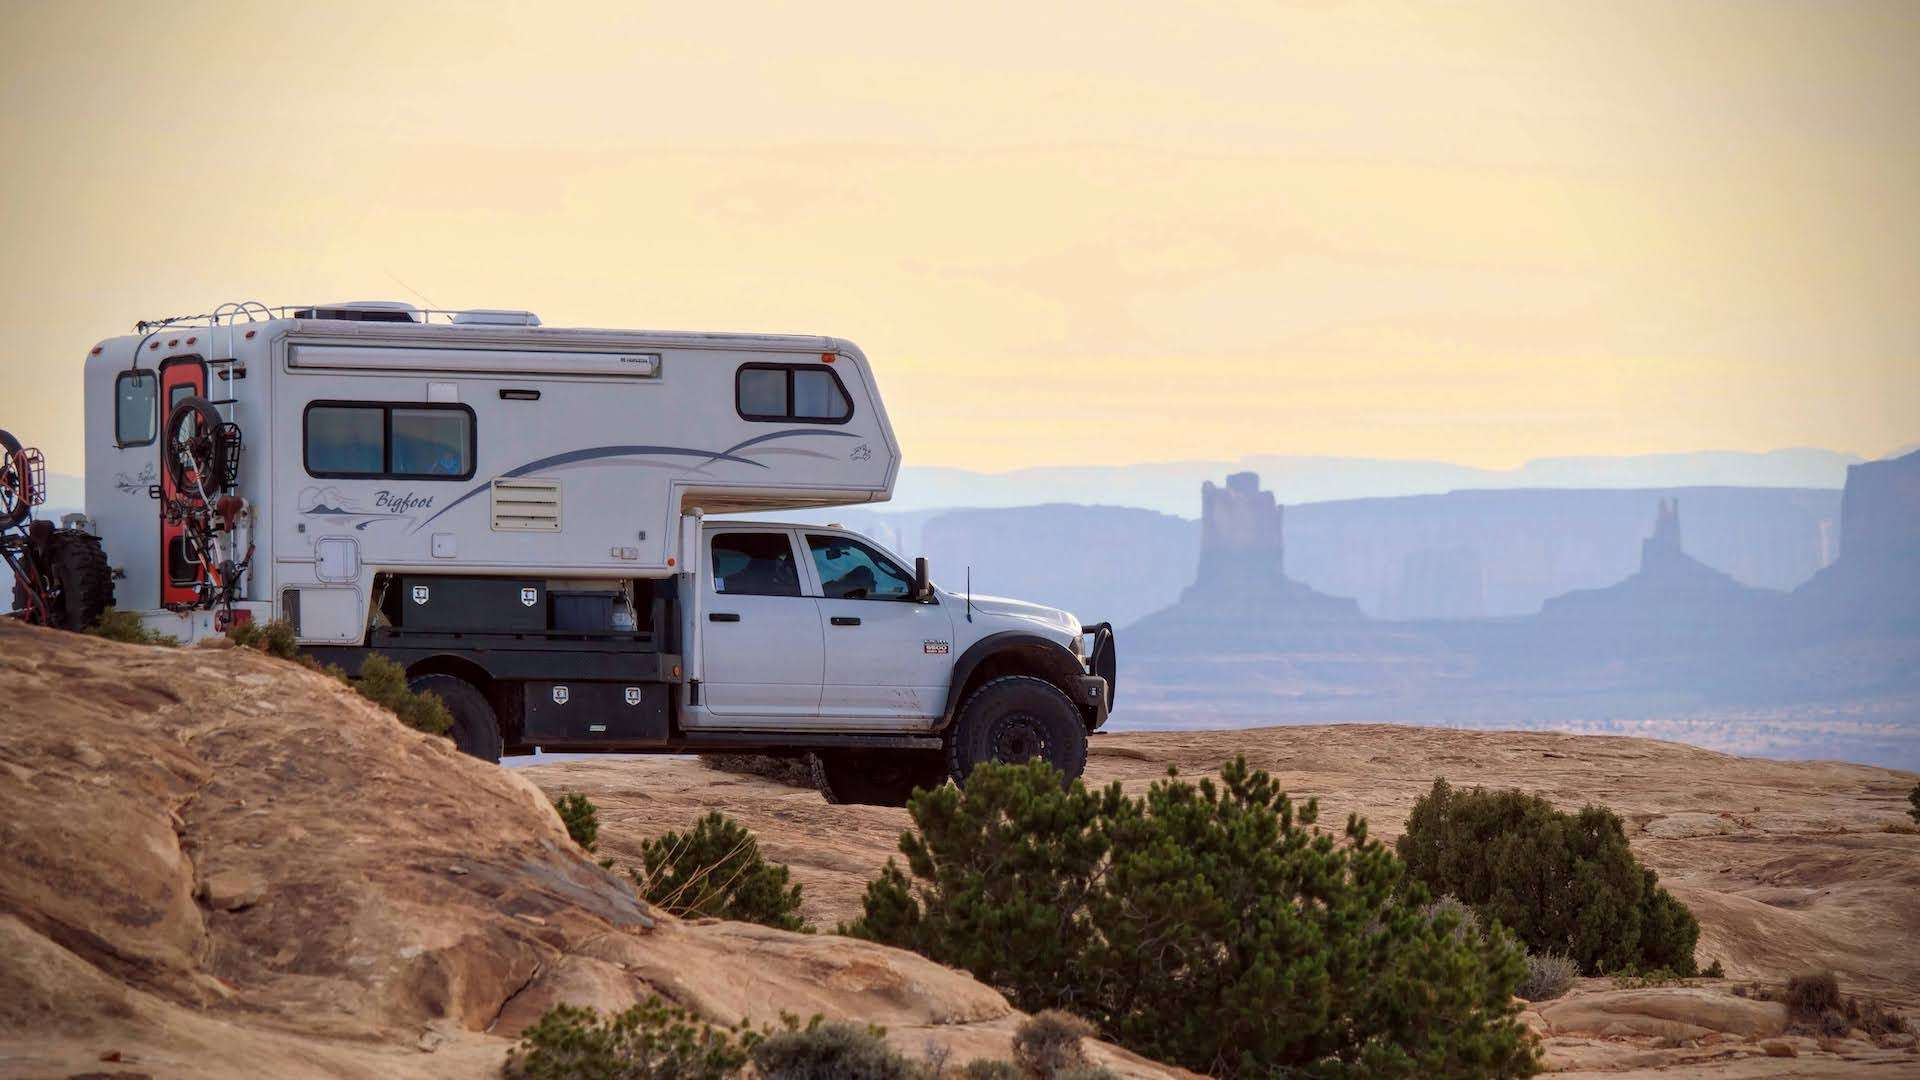 motm bigfoot truck camper at monument valley